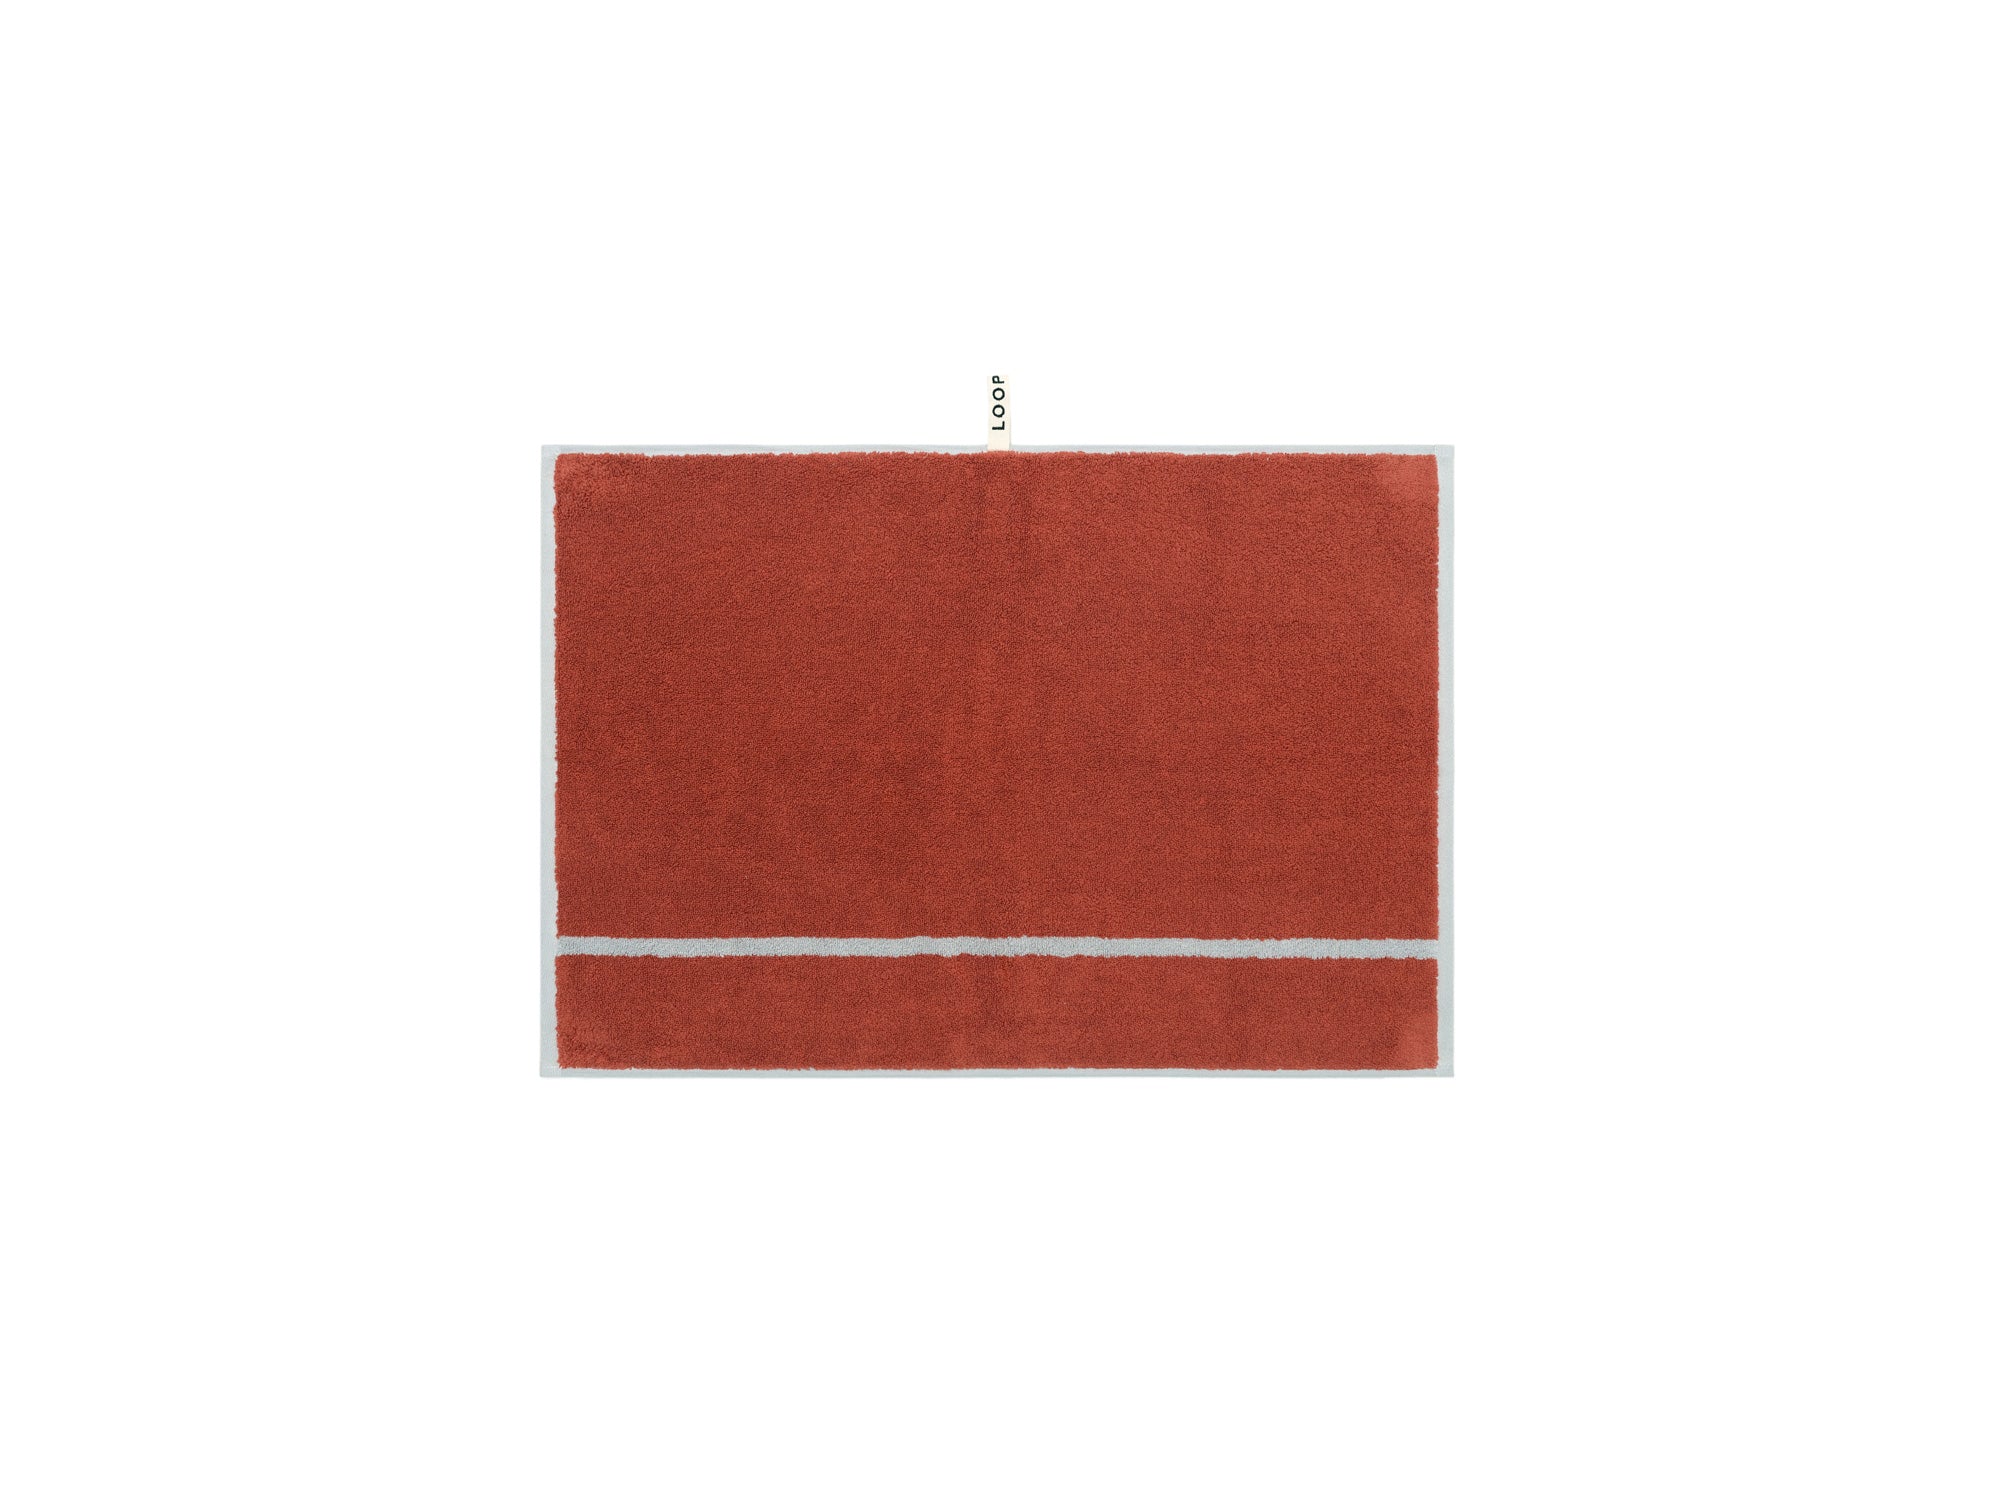 Bath Sheet Bundle - Terracotta/Stone - Simple Stripe